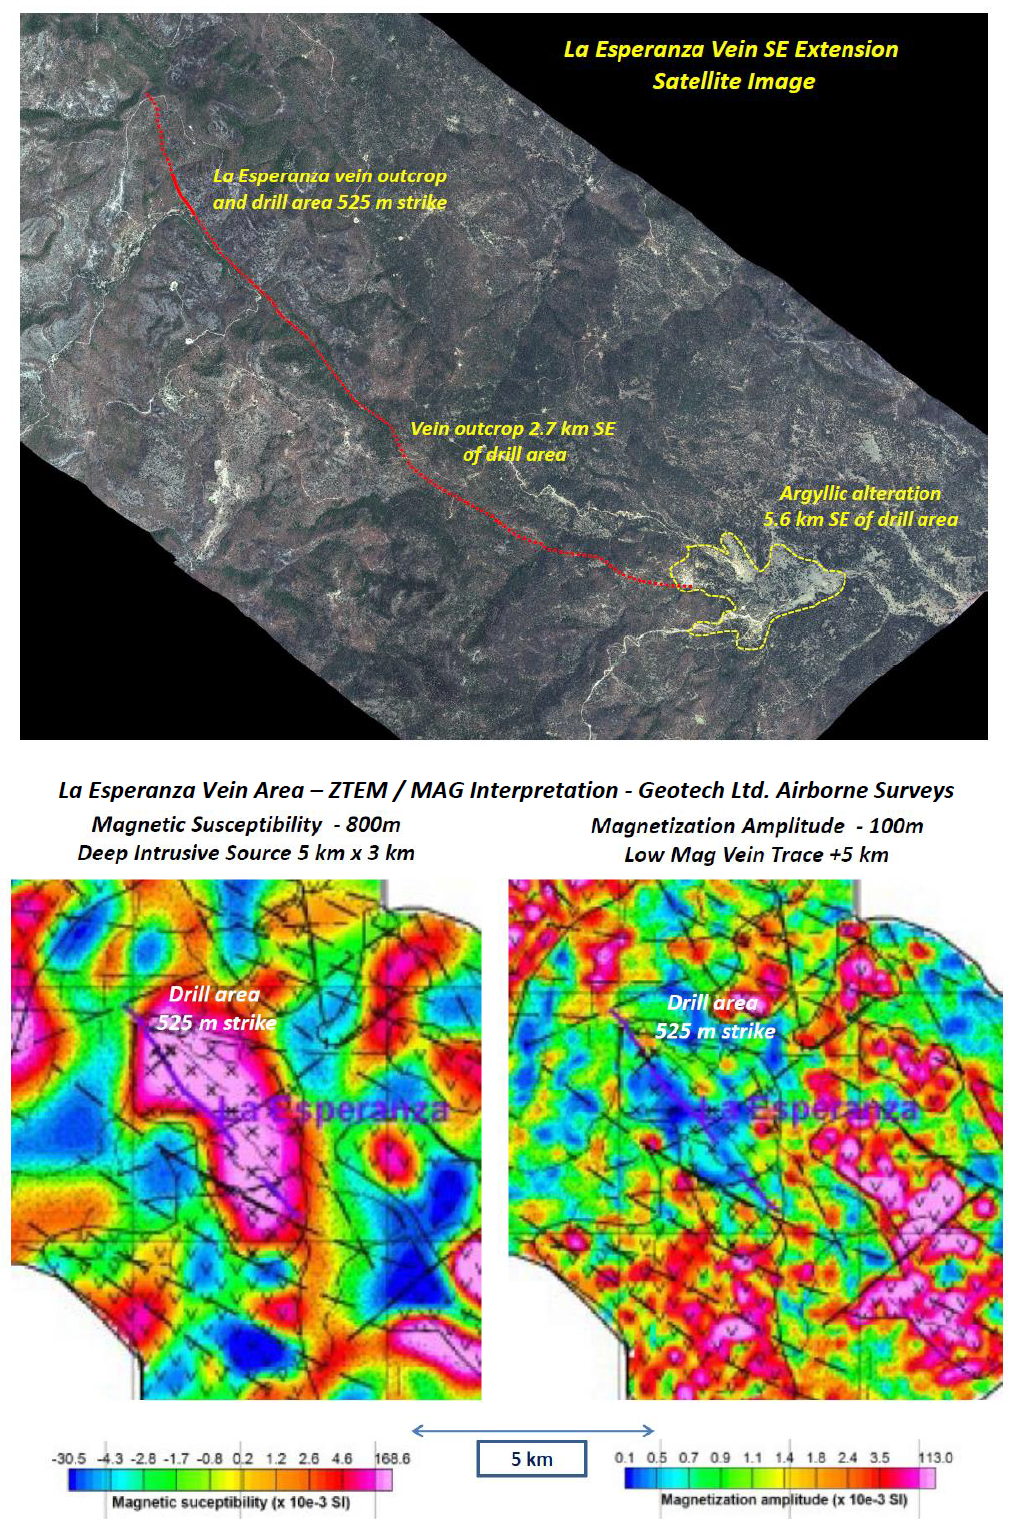 Fig. 2: La Esperanza Vein Potential Strike Extent – Satellite Image and ZTEM/MAG Interpretation